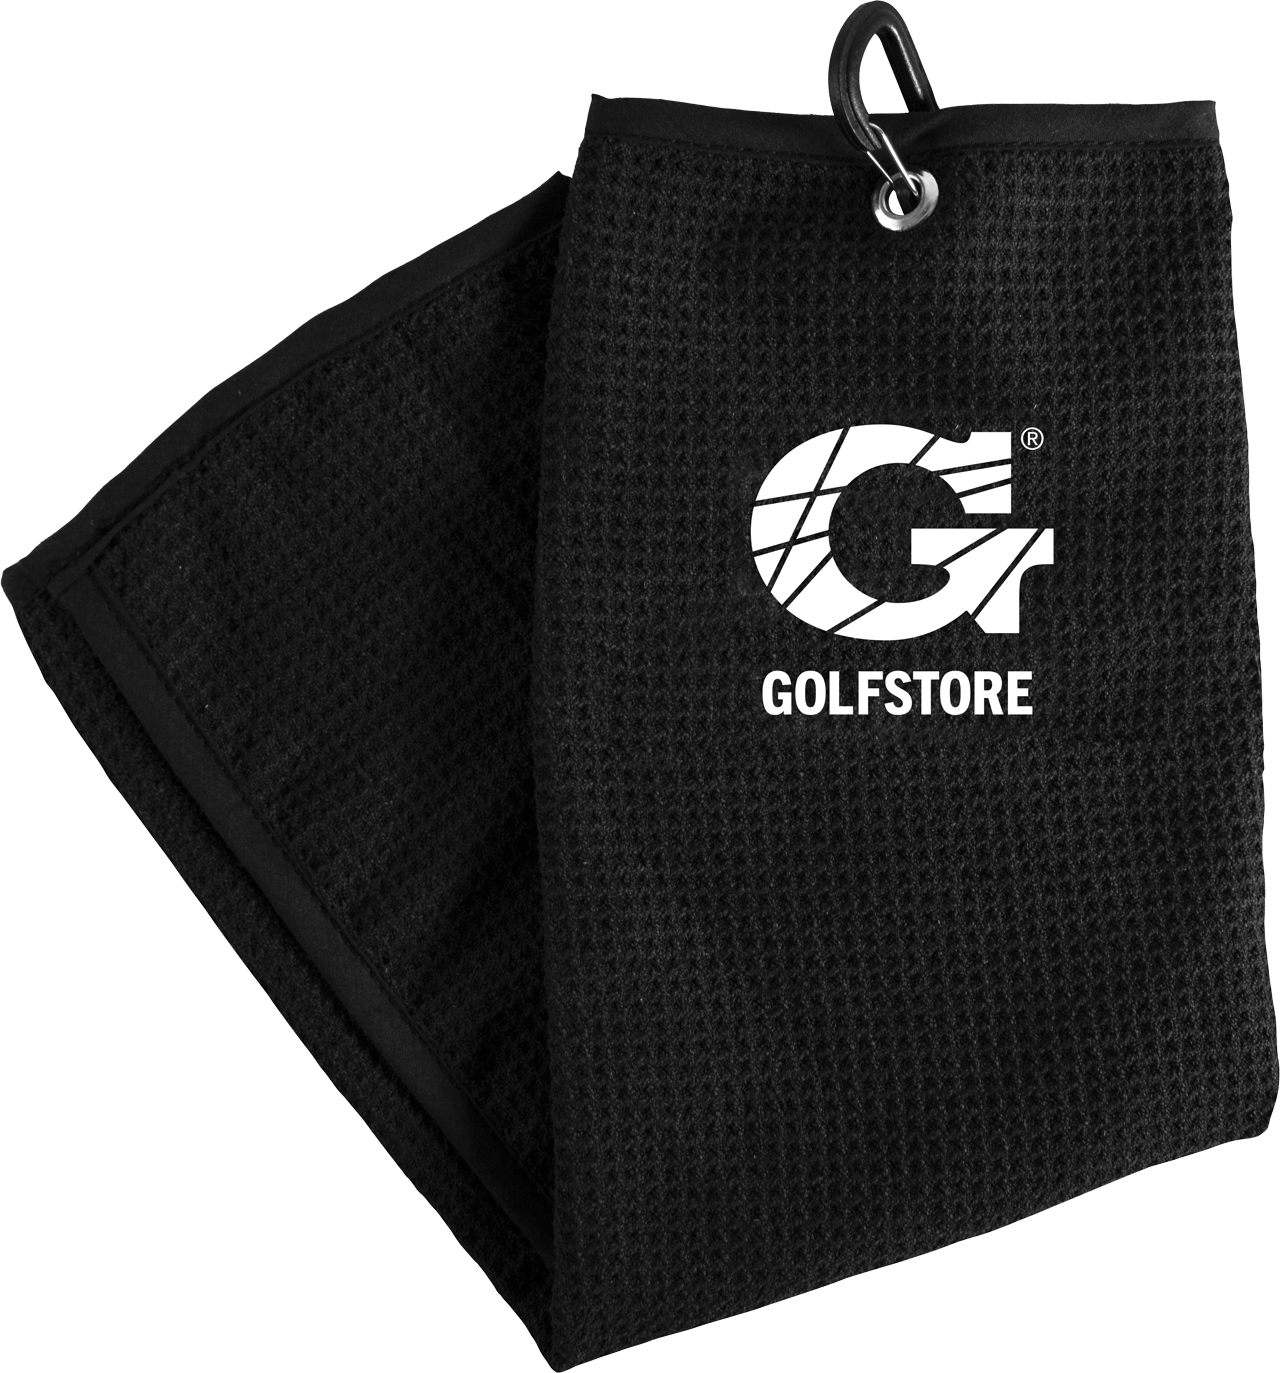 Golfhanddoek met Golfstore-logo - Bk